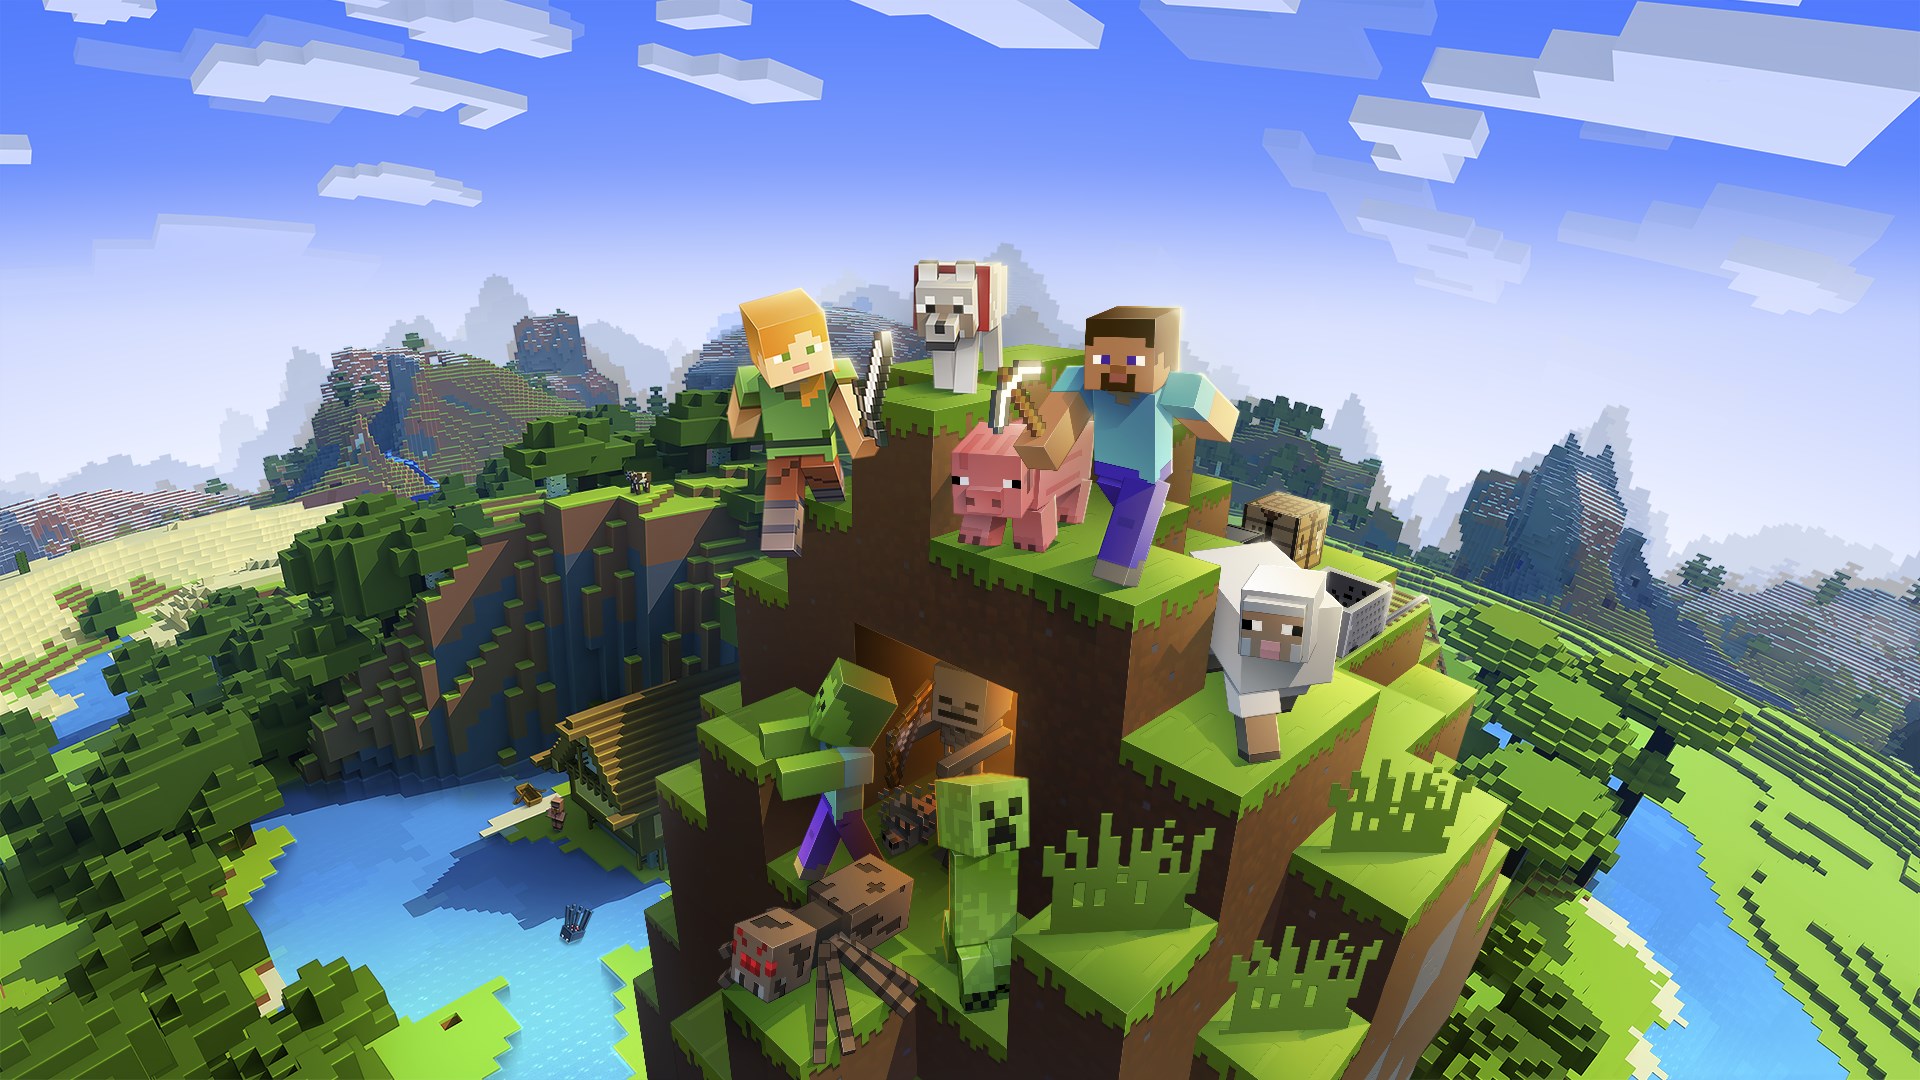 Obter Minecraft for Windows - Microsoft Store pt-ST